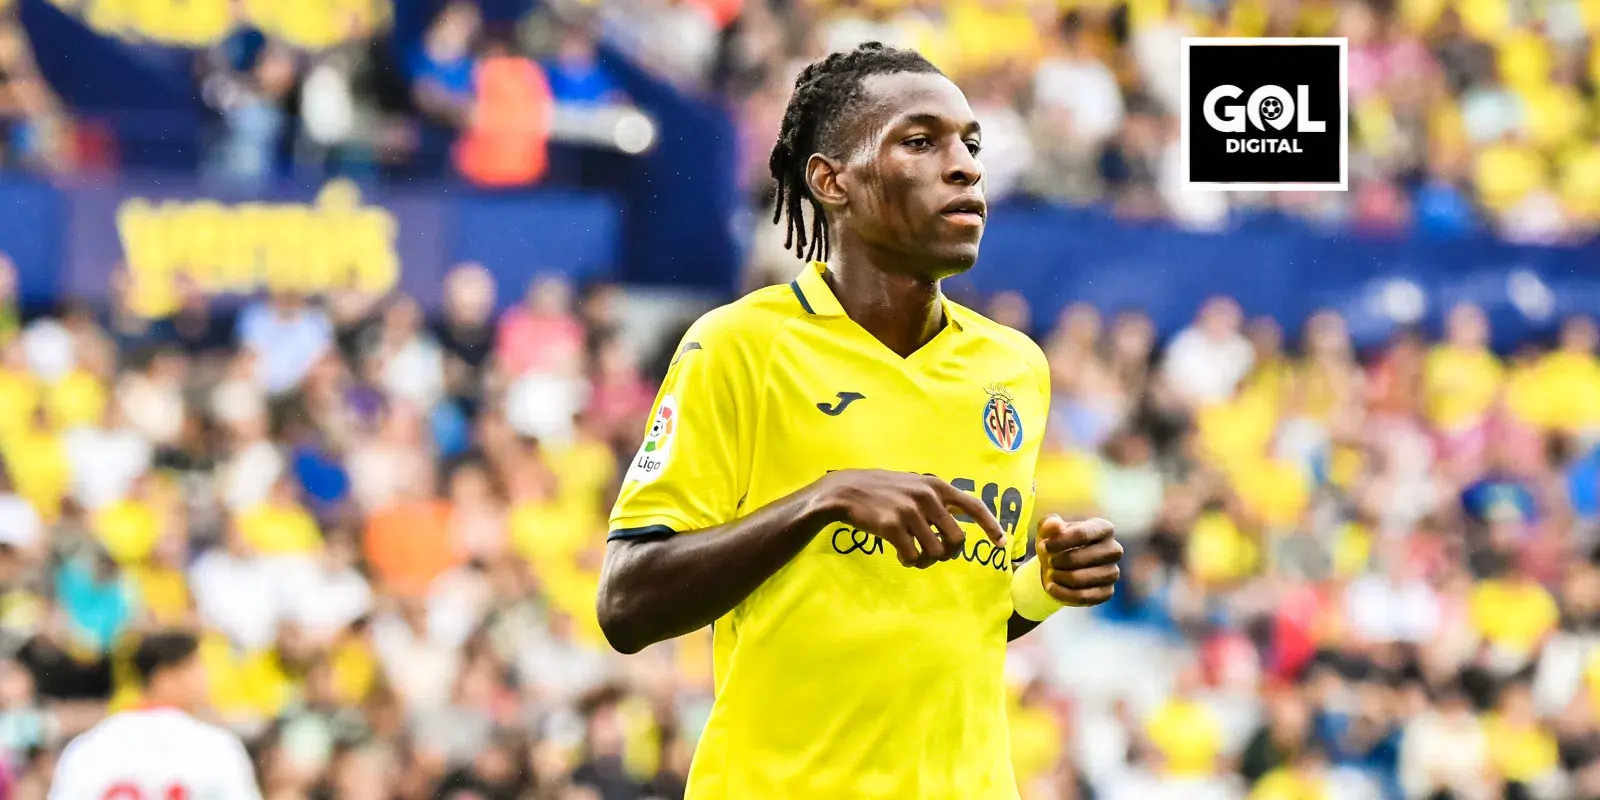 Villarreal CF raises money with Jackson to go for a 15-goal striker
